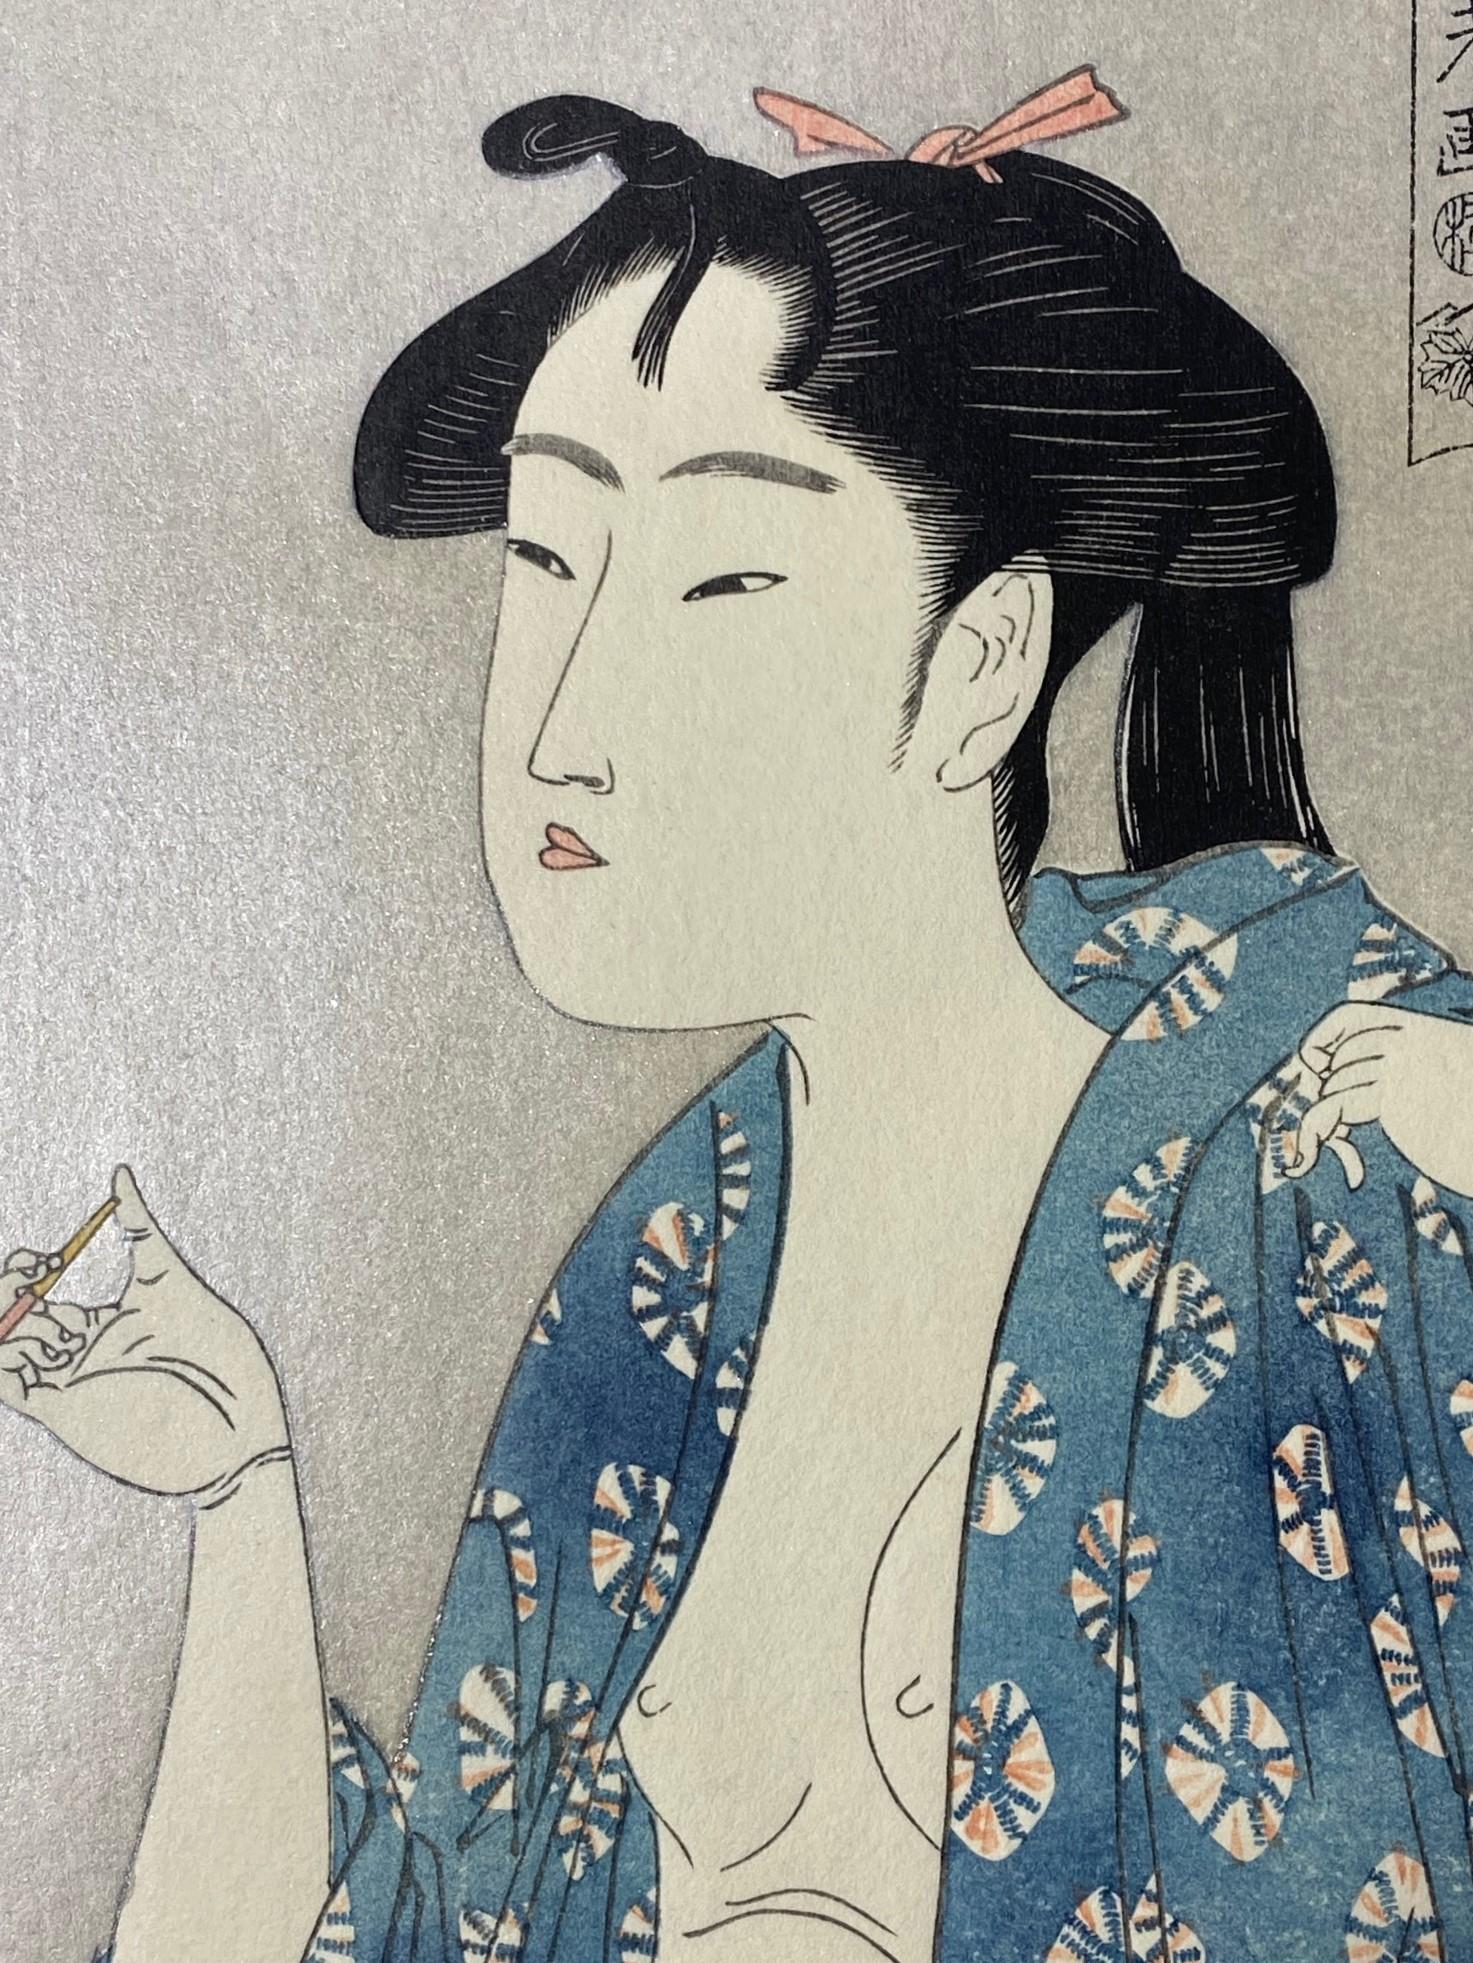 Kitagawa Utamaro Japanese Woodblock Print Edo Semi-Nude Woman Smoking Opium Pipe In Good Condition For Sale In Studio City, CA